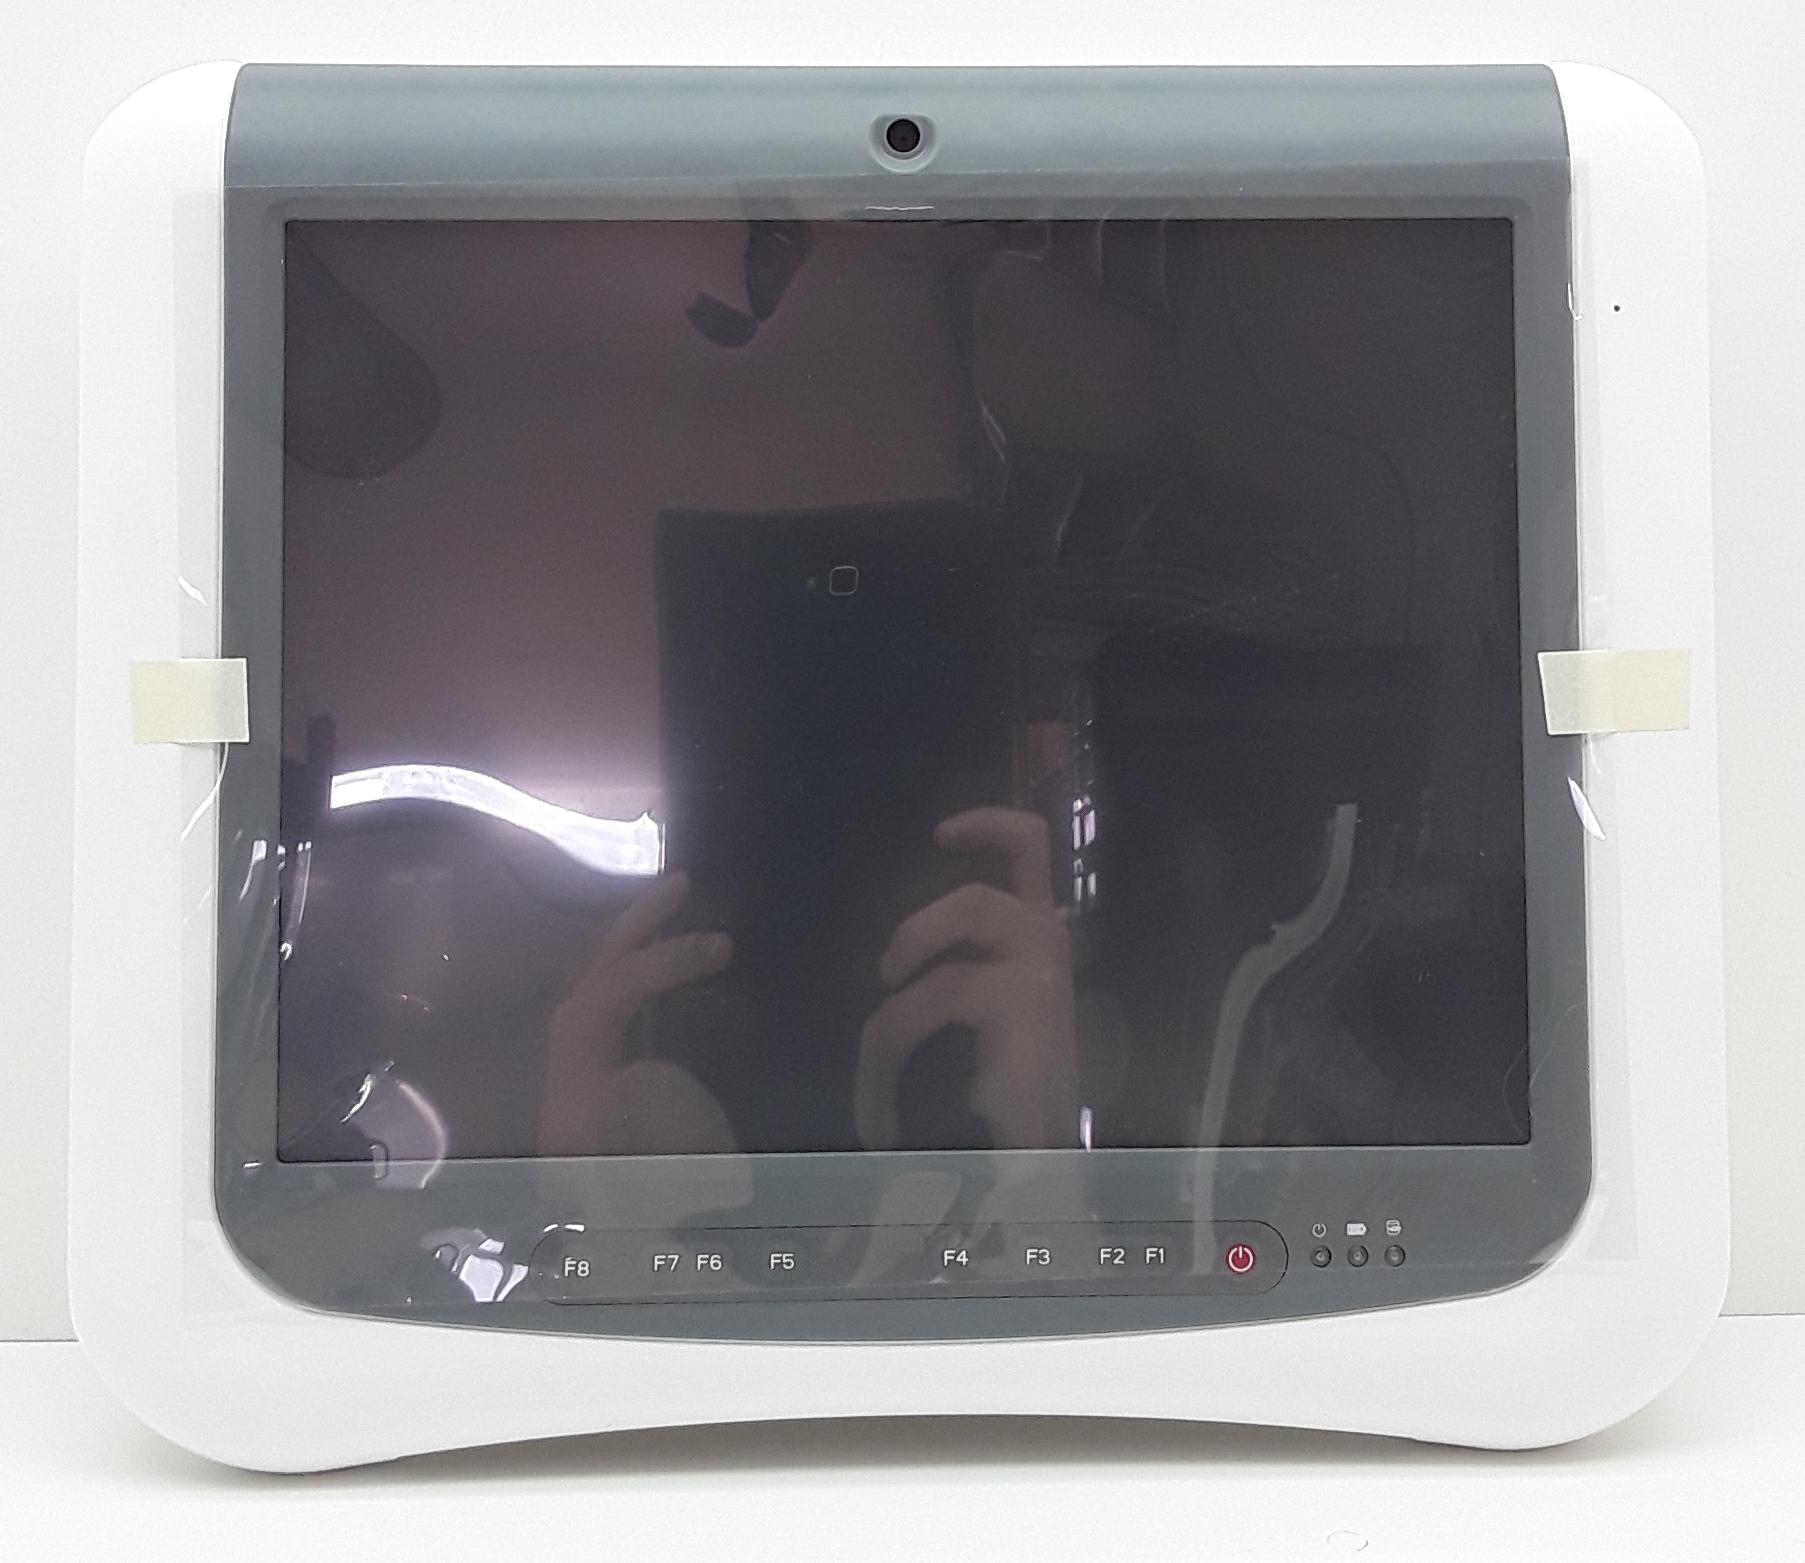 Arbor Technology M1525 Medical Panel PC